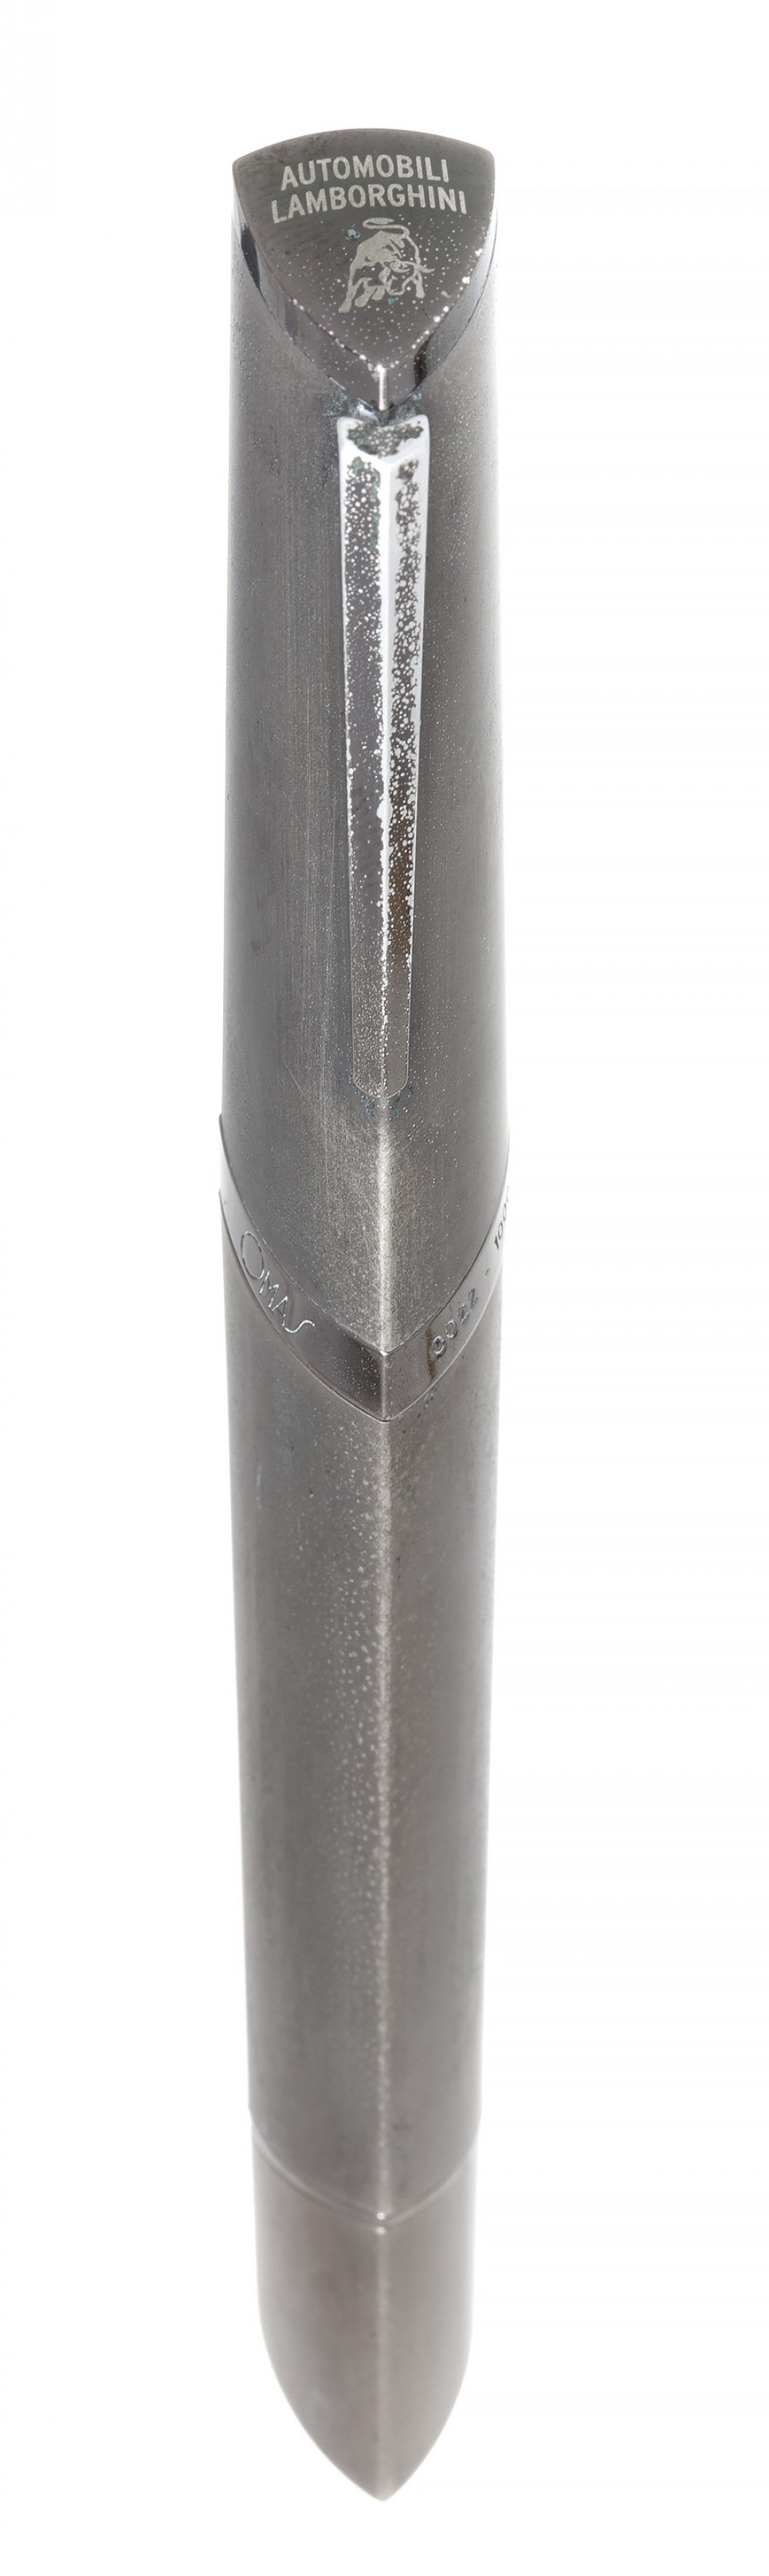 OMAS "LAMBORGHINI" FOUNTAIN PEN.Titanium barrel.Limited edition. Exemplary 0022/1000.Nib in 18 kts